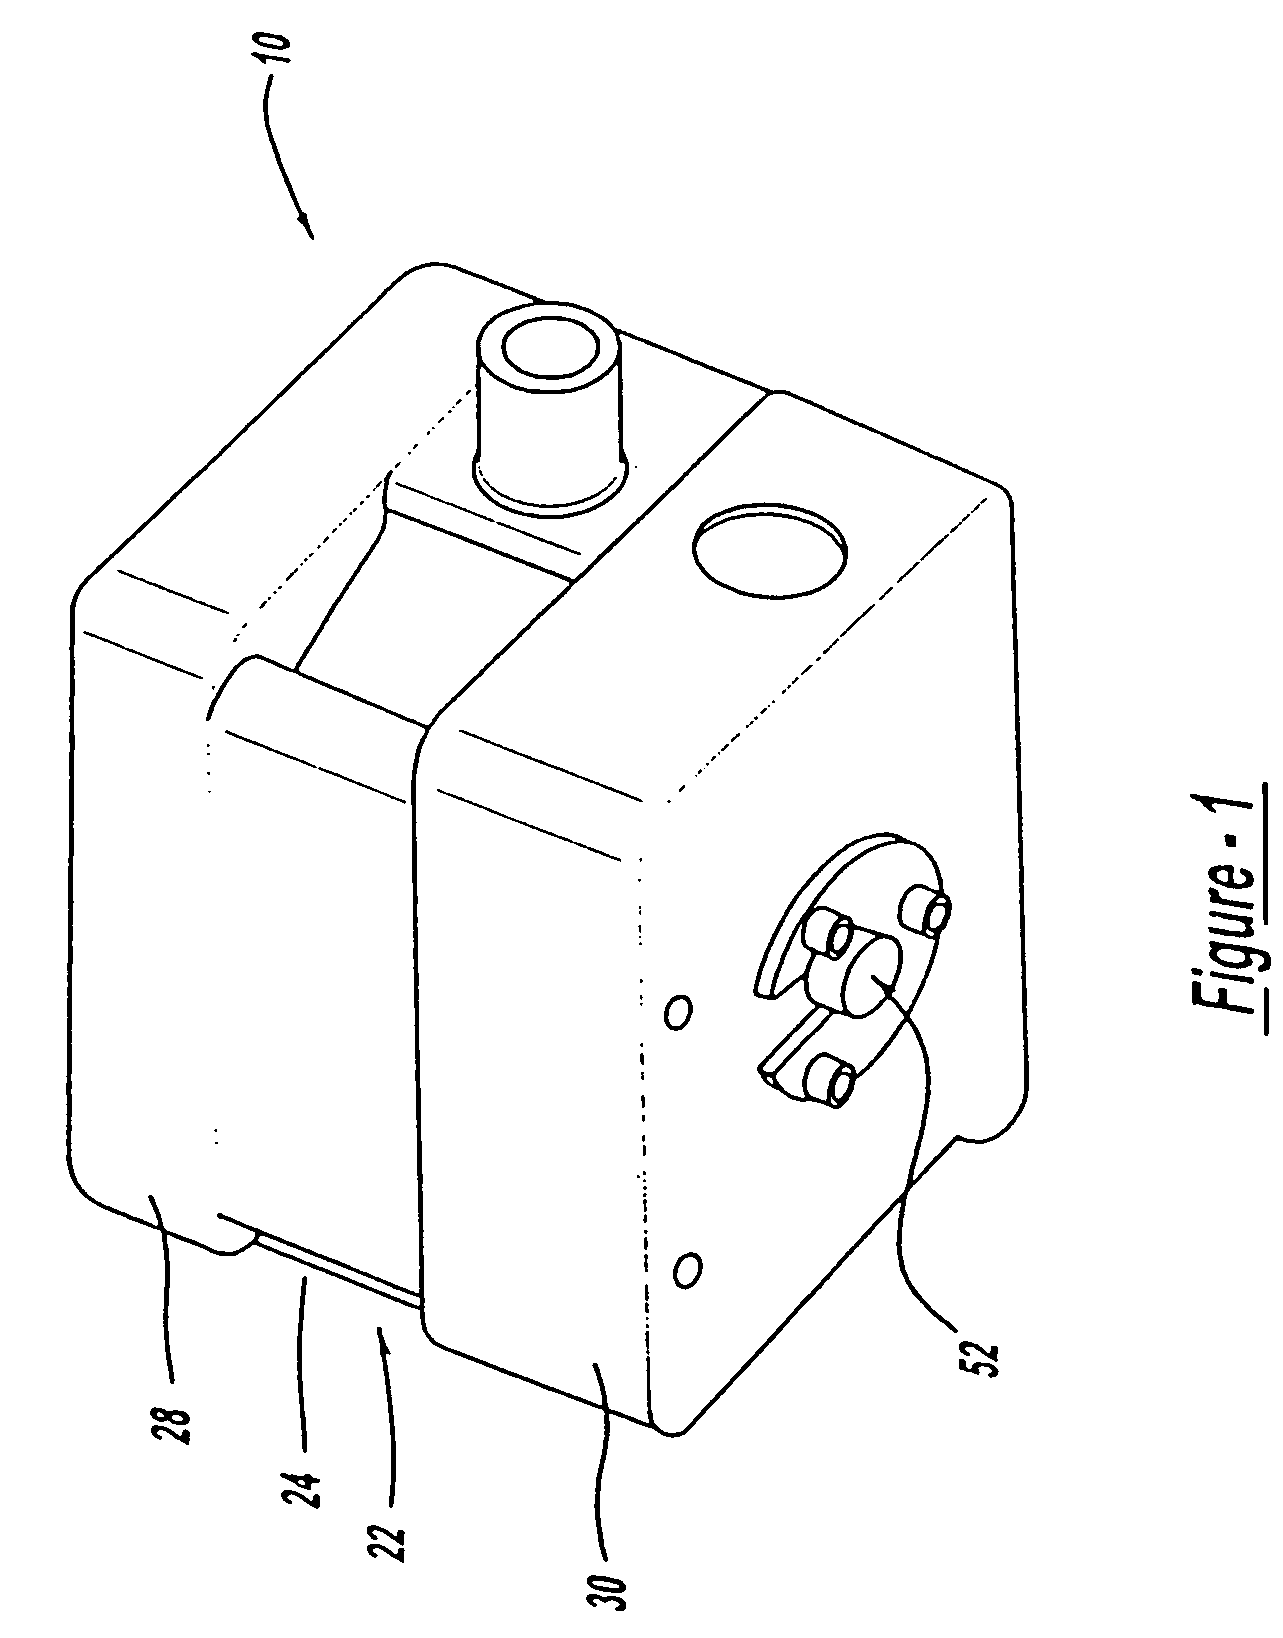 Variable displacement vane pump with variable target regulator